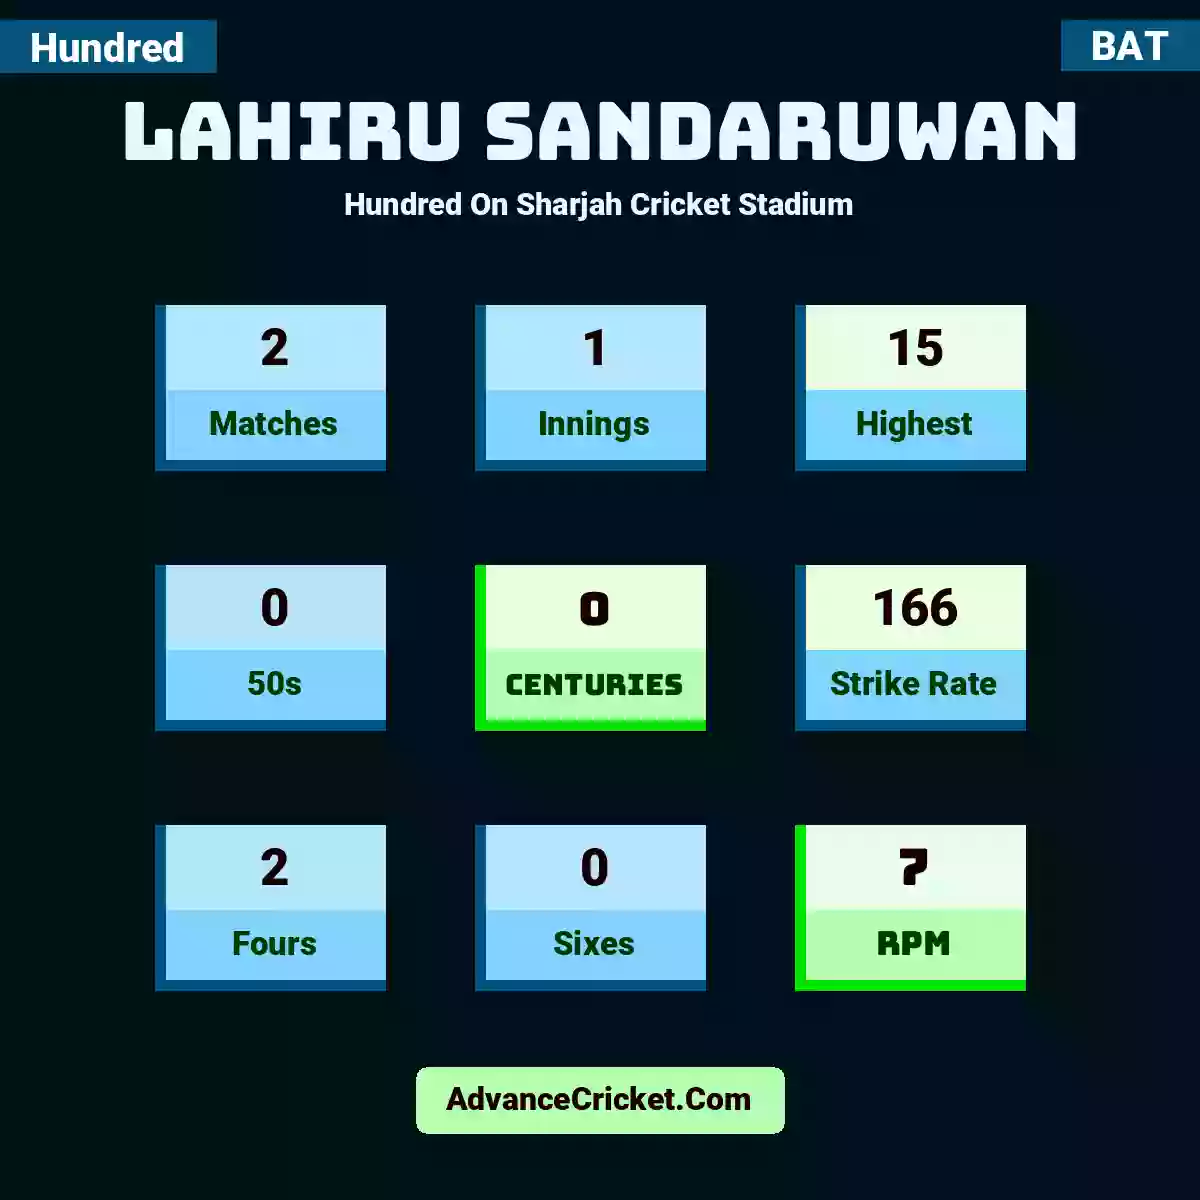 Lahiru Sandaruwan Hundred  On Sharjah Cricket Stadium, Lahiru Sandaruwan played 2 matches, scored 15 runs as highest, 0 half-centuries, and 0 centuries, with a strike rate of 166. L.Sandaruwan hit 2 fours and 0 sixes, with an RPM of 7.